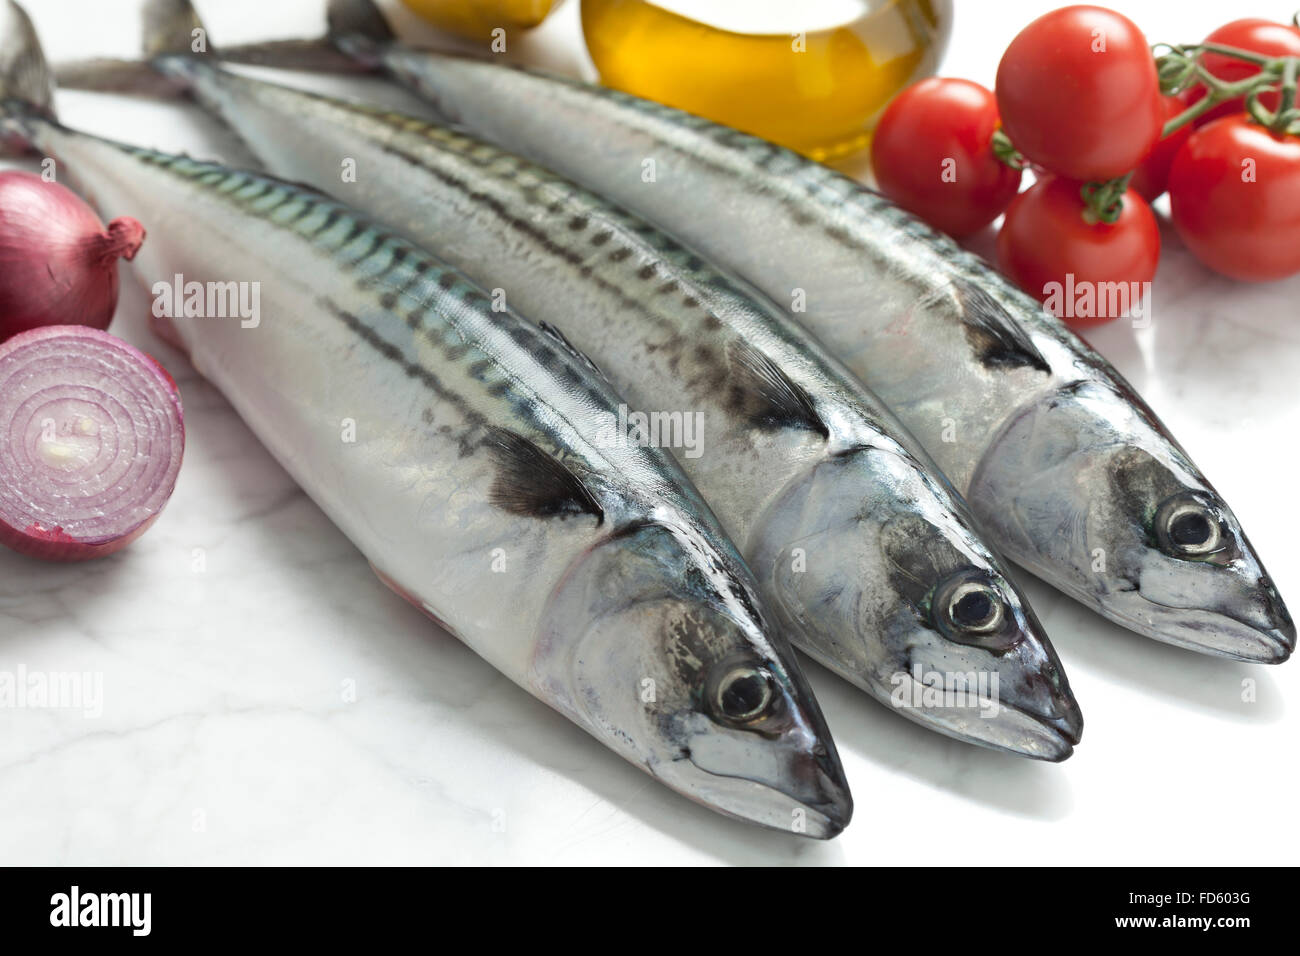 Fresh mackerels ready to cook Stock Photo